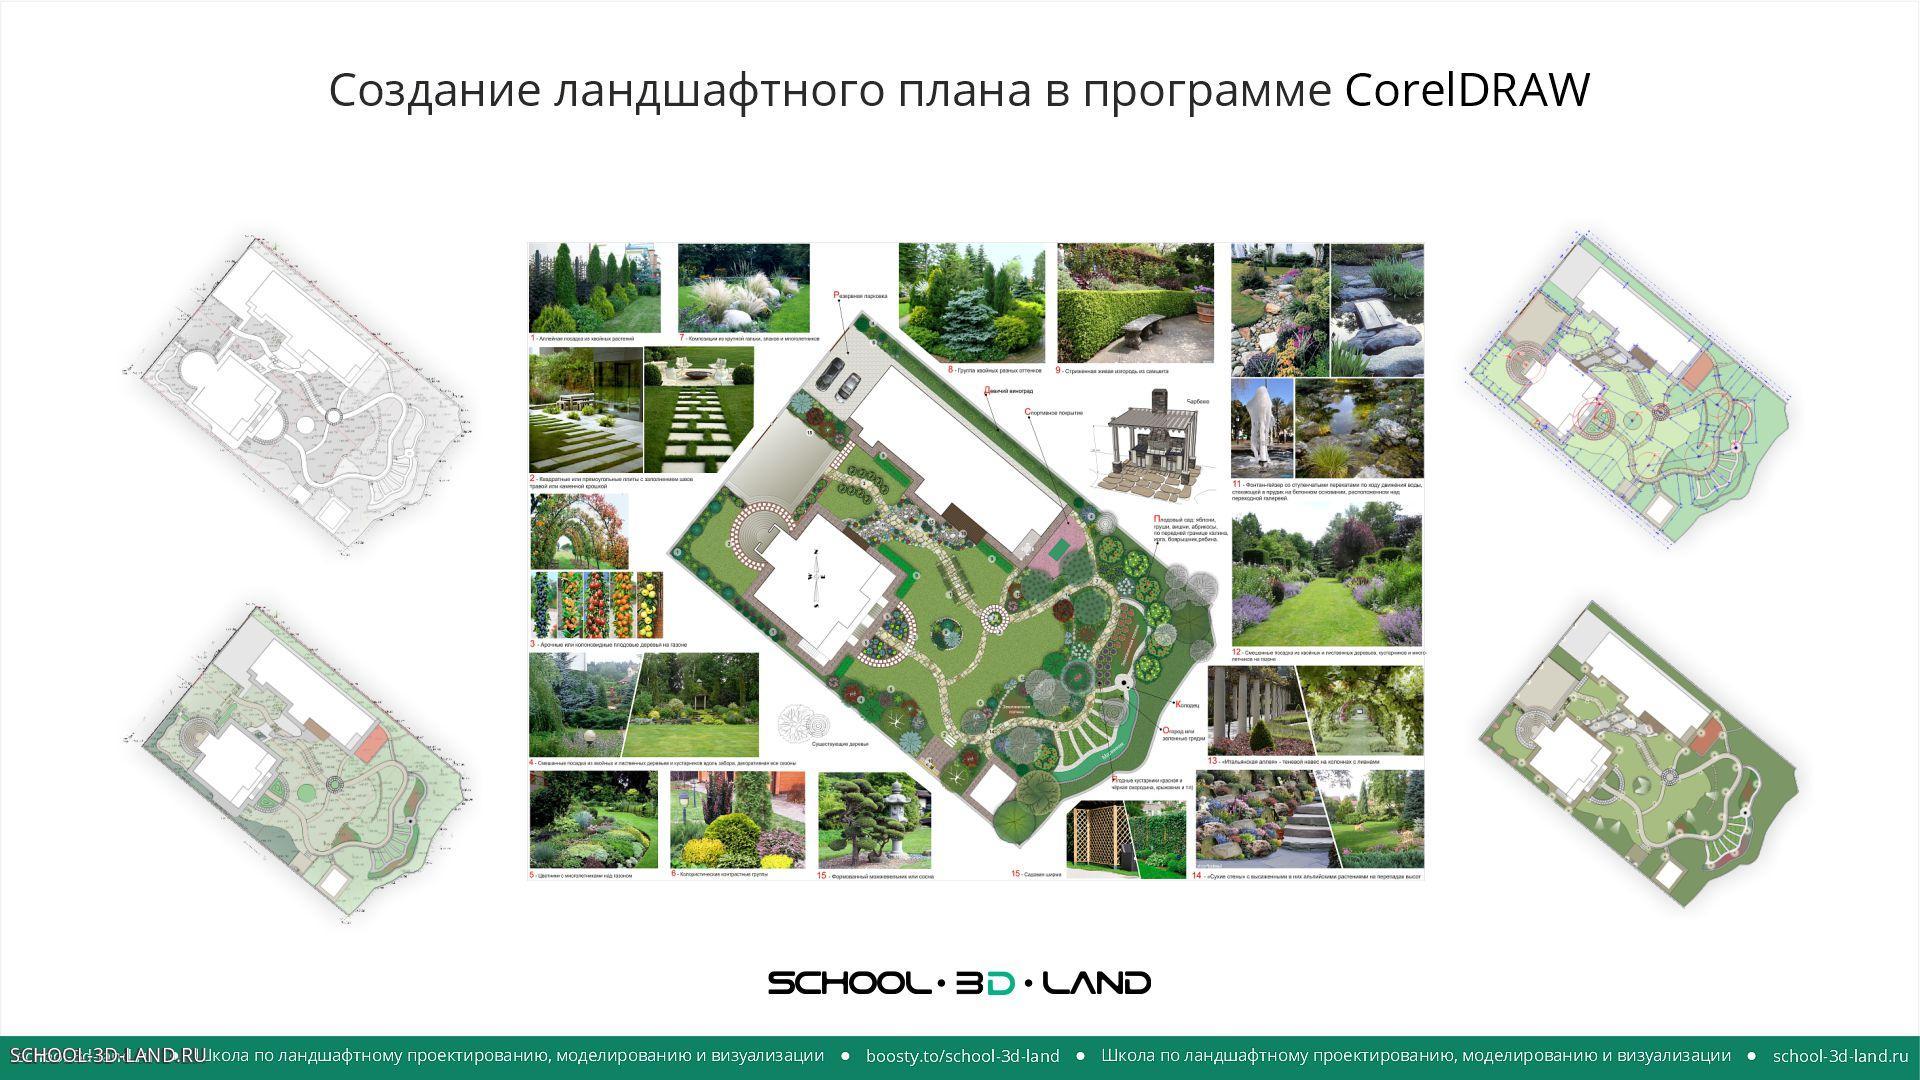 Creating a landscape plan in CorelDRAW